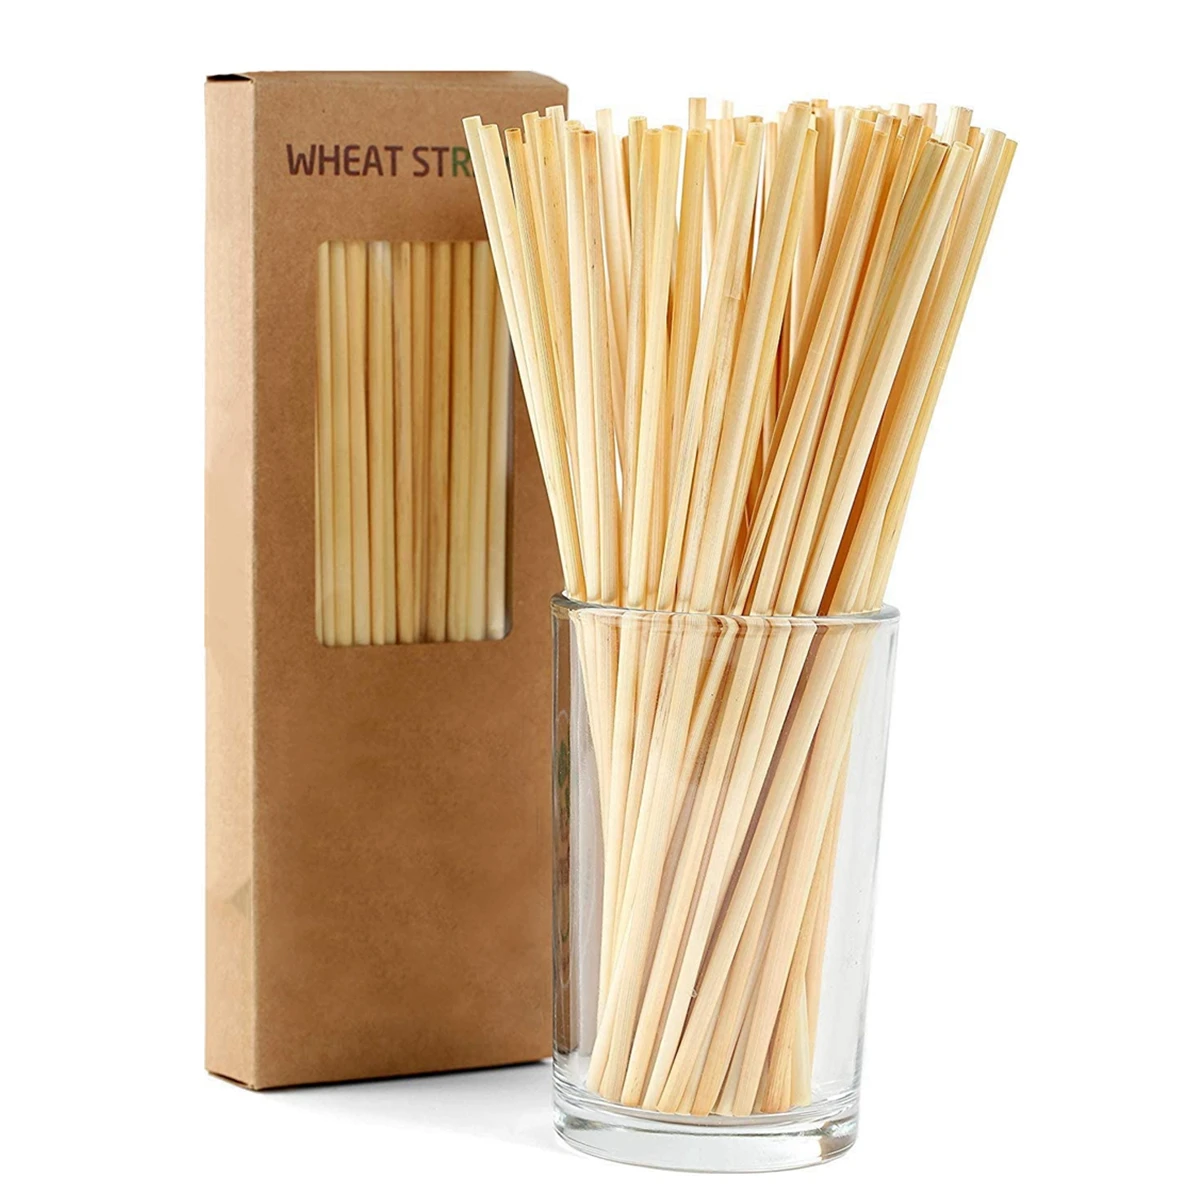 

100pcs Disposable Drinking Straws Eco-friendly Biodegradable Straws Natural Wheat Straws for Cocktail Bar Milk Tea Kitchenware